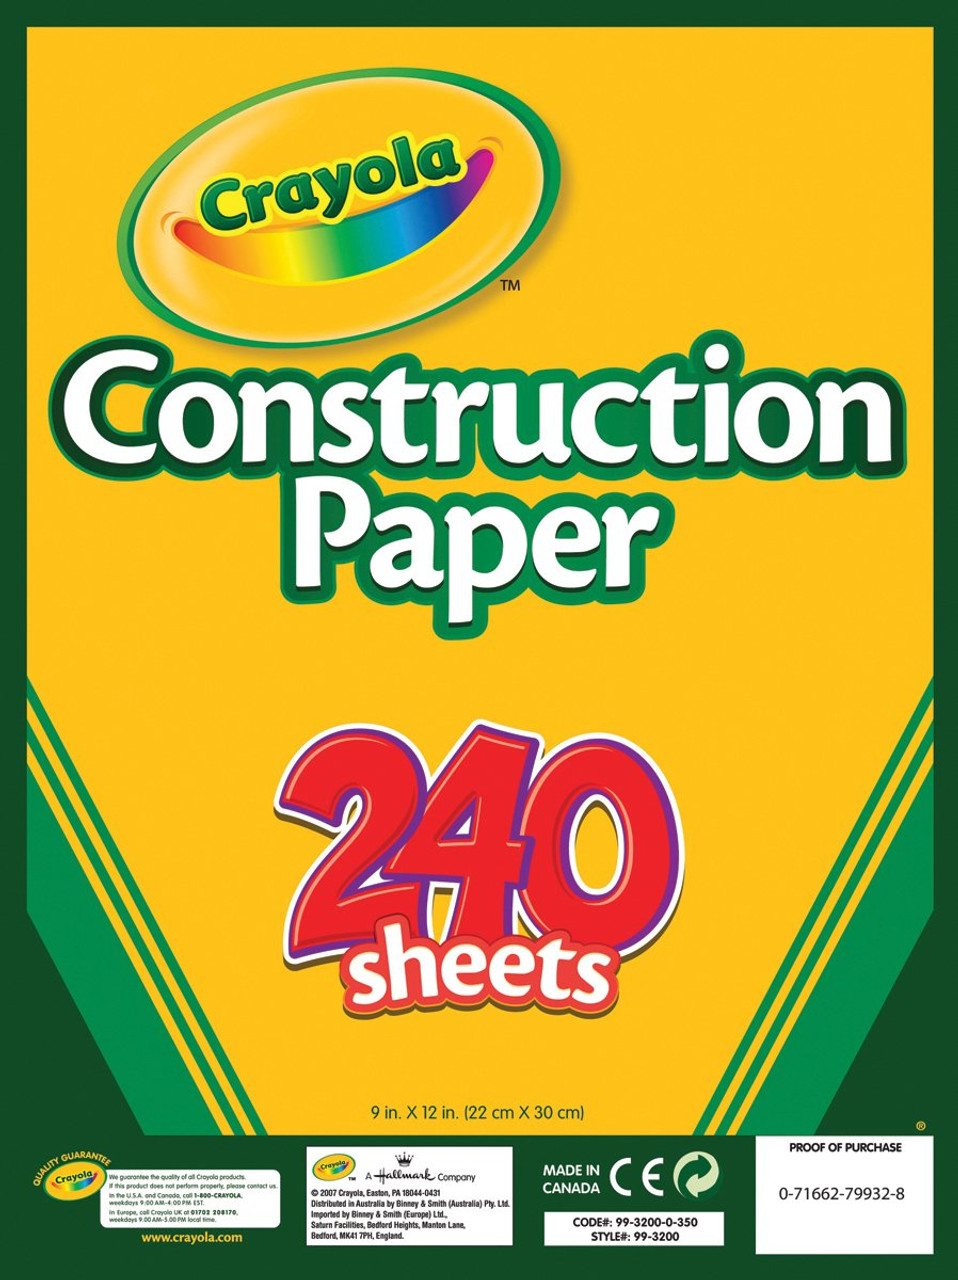 Crayola Construction Paper, 240 Sheets